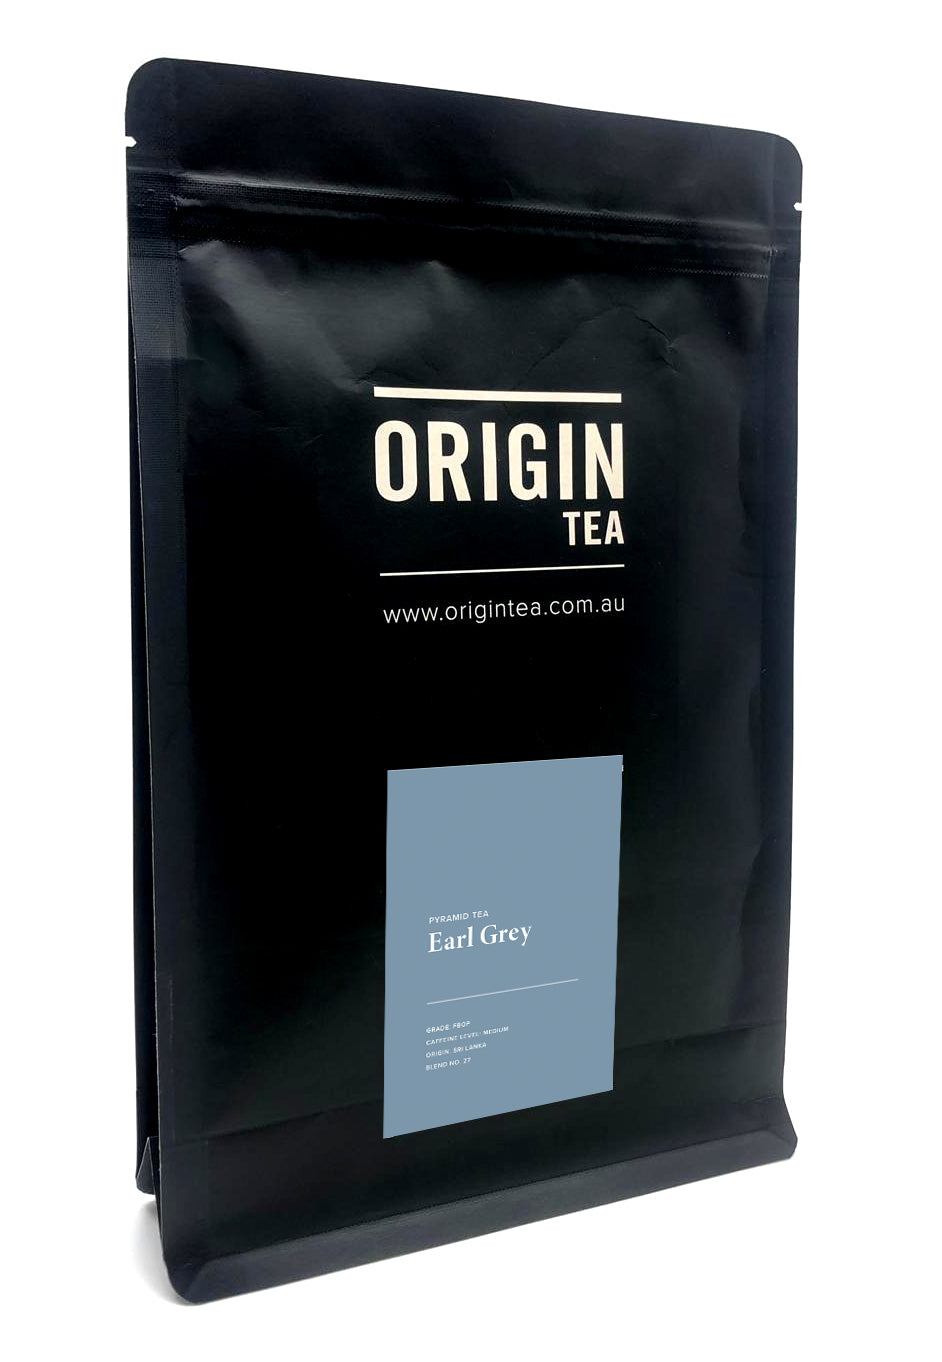 Origin Tea - Loose Leaf Tea [500g]